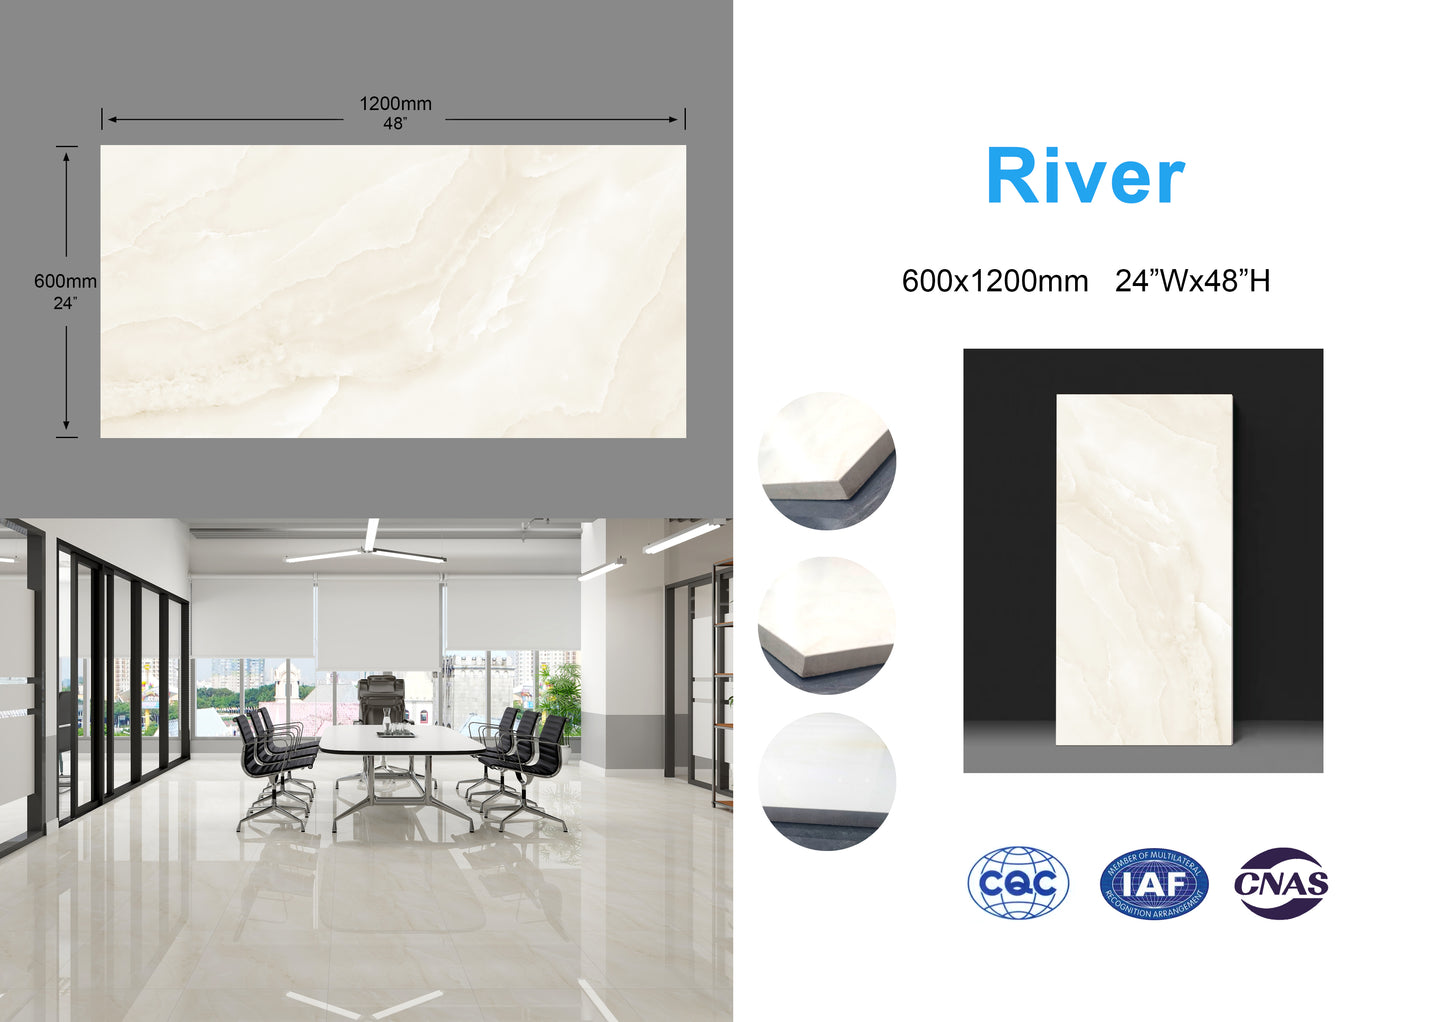 River family Full Polished Glazed Tile 24"x48" 3pcs/box 24sf/box $1.59/sf (15 days return/exchange) Bulk Deal 2000sf+ $1.39/SF(No return/no exchange)